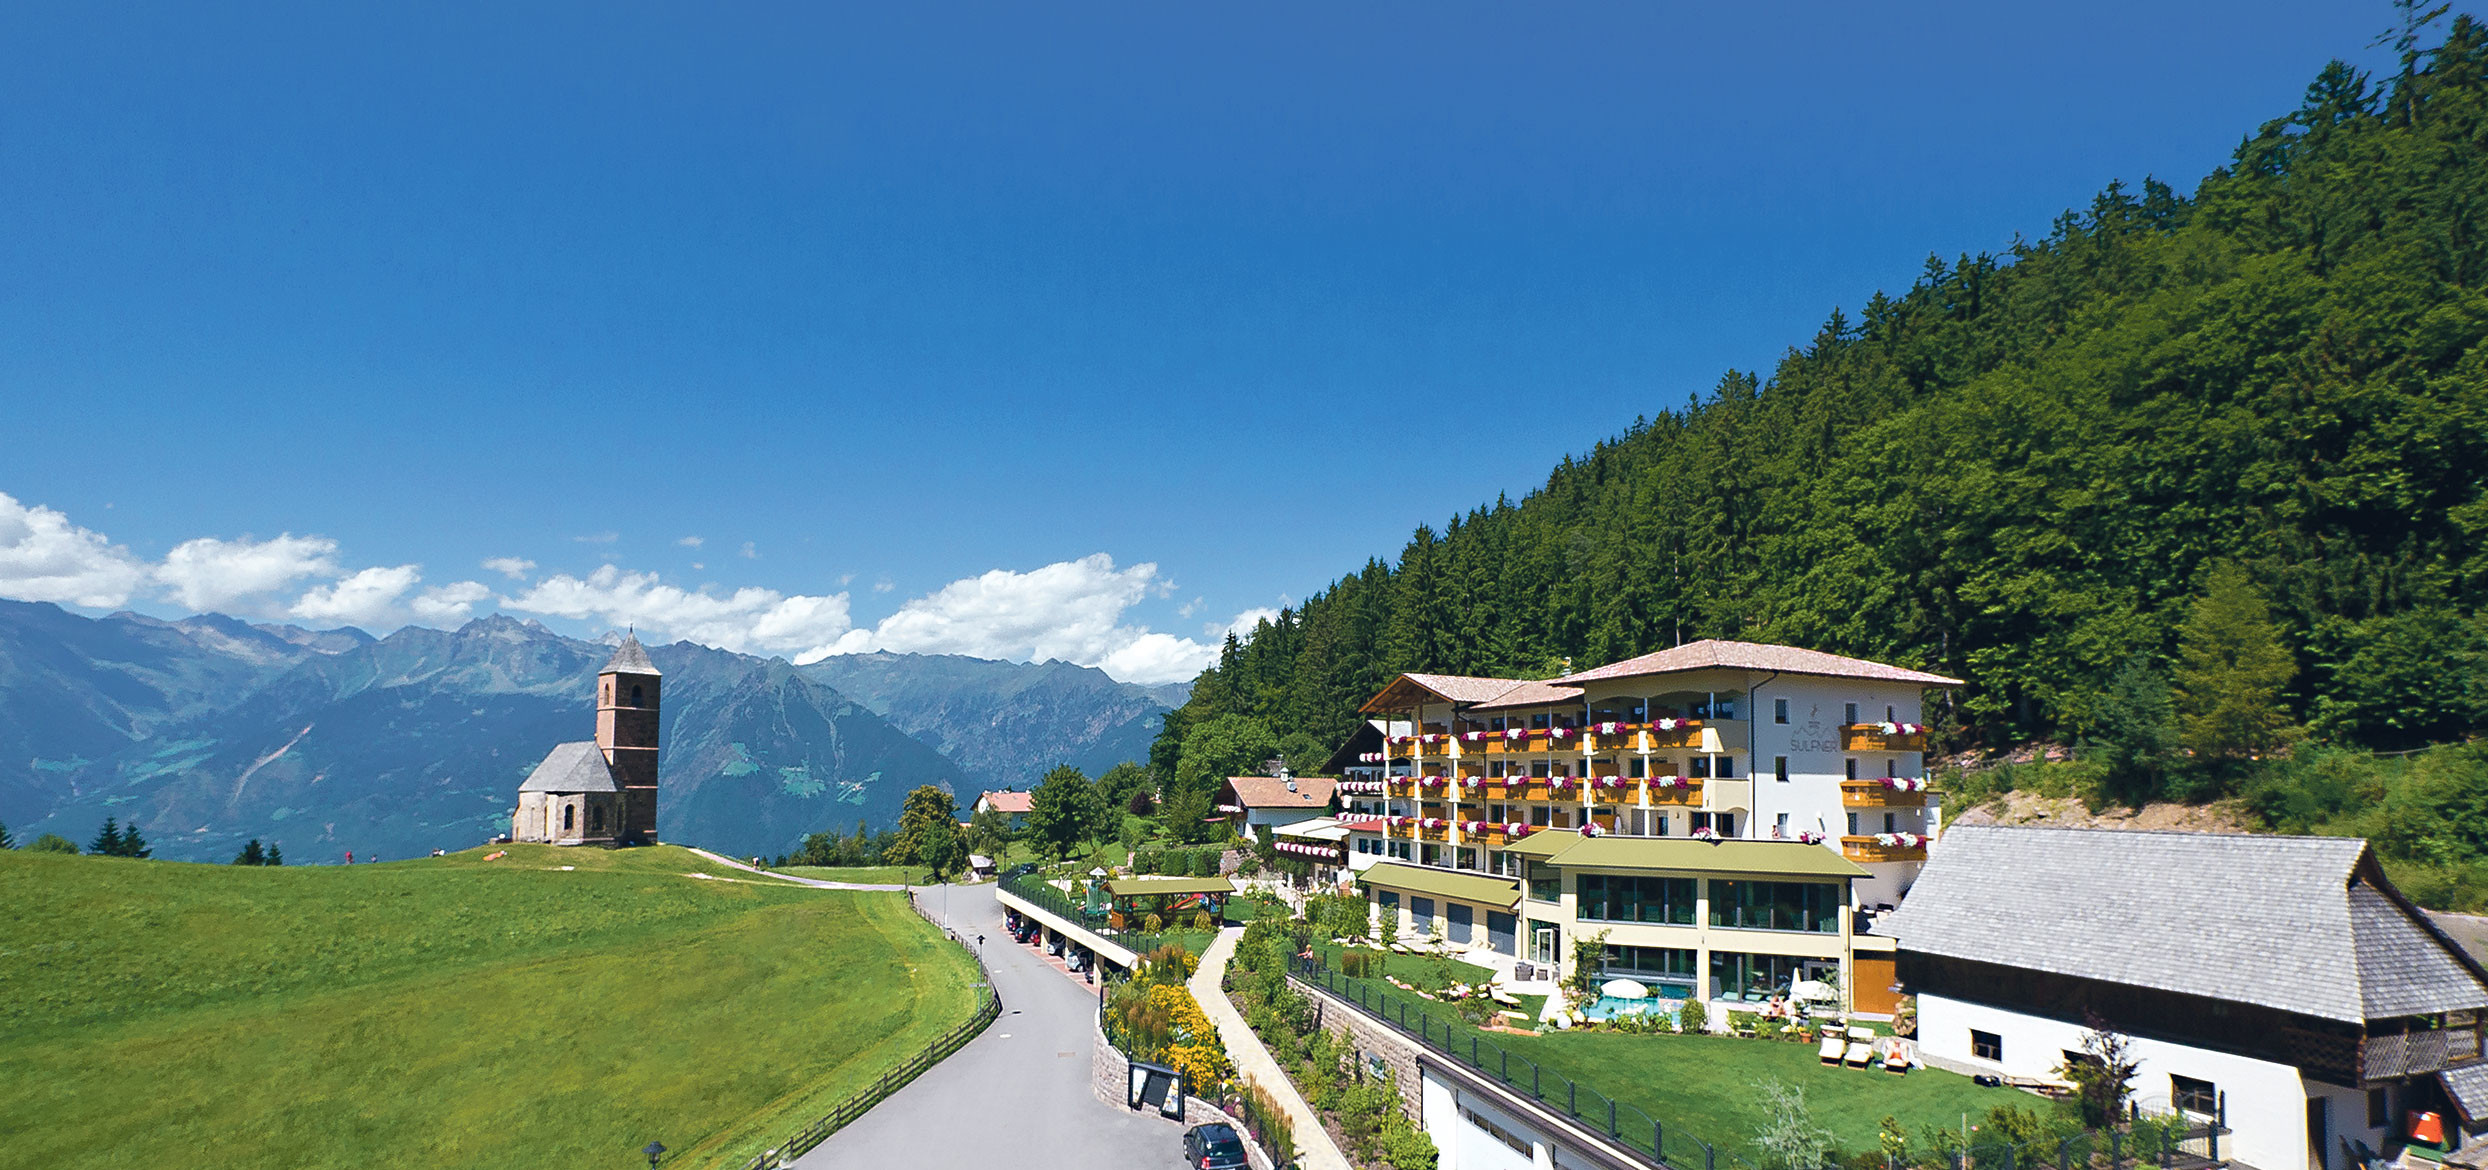 Hotel Sulfner Hafling Südtirol | Hotel Sulfner Avelengo Alto Adige | Hotel Sulfner Hafling South Tyrol